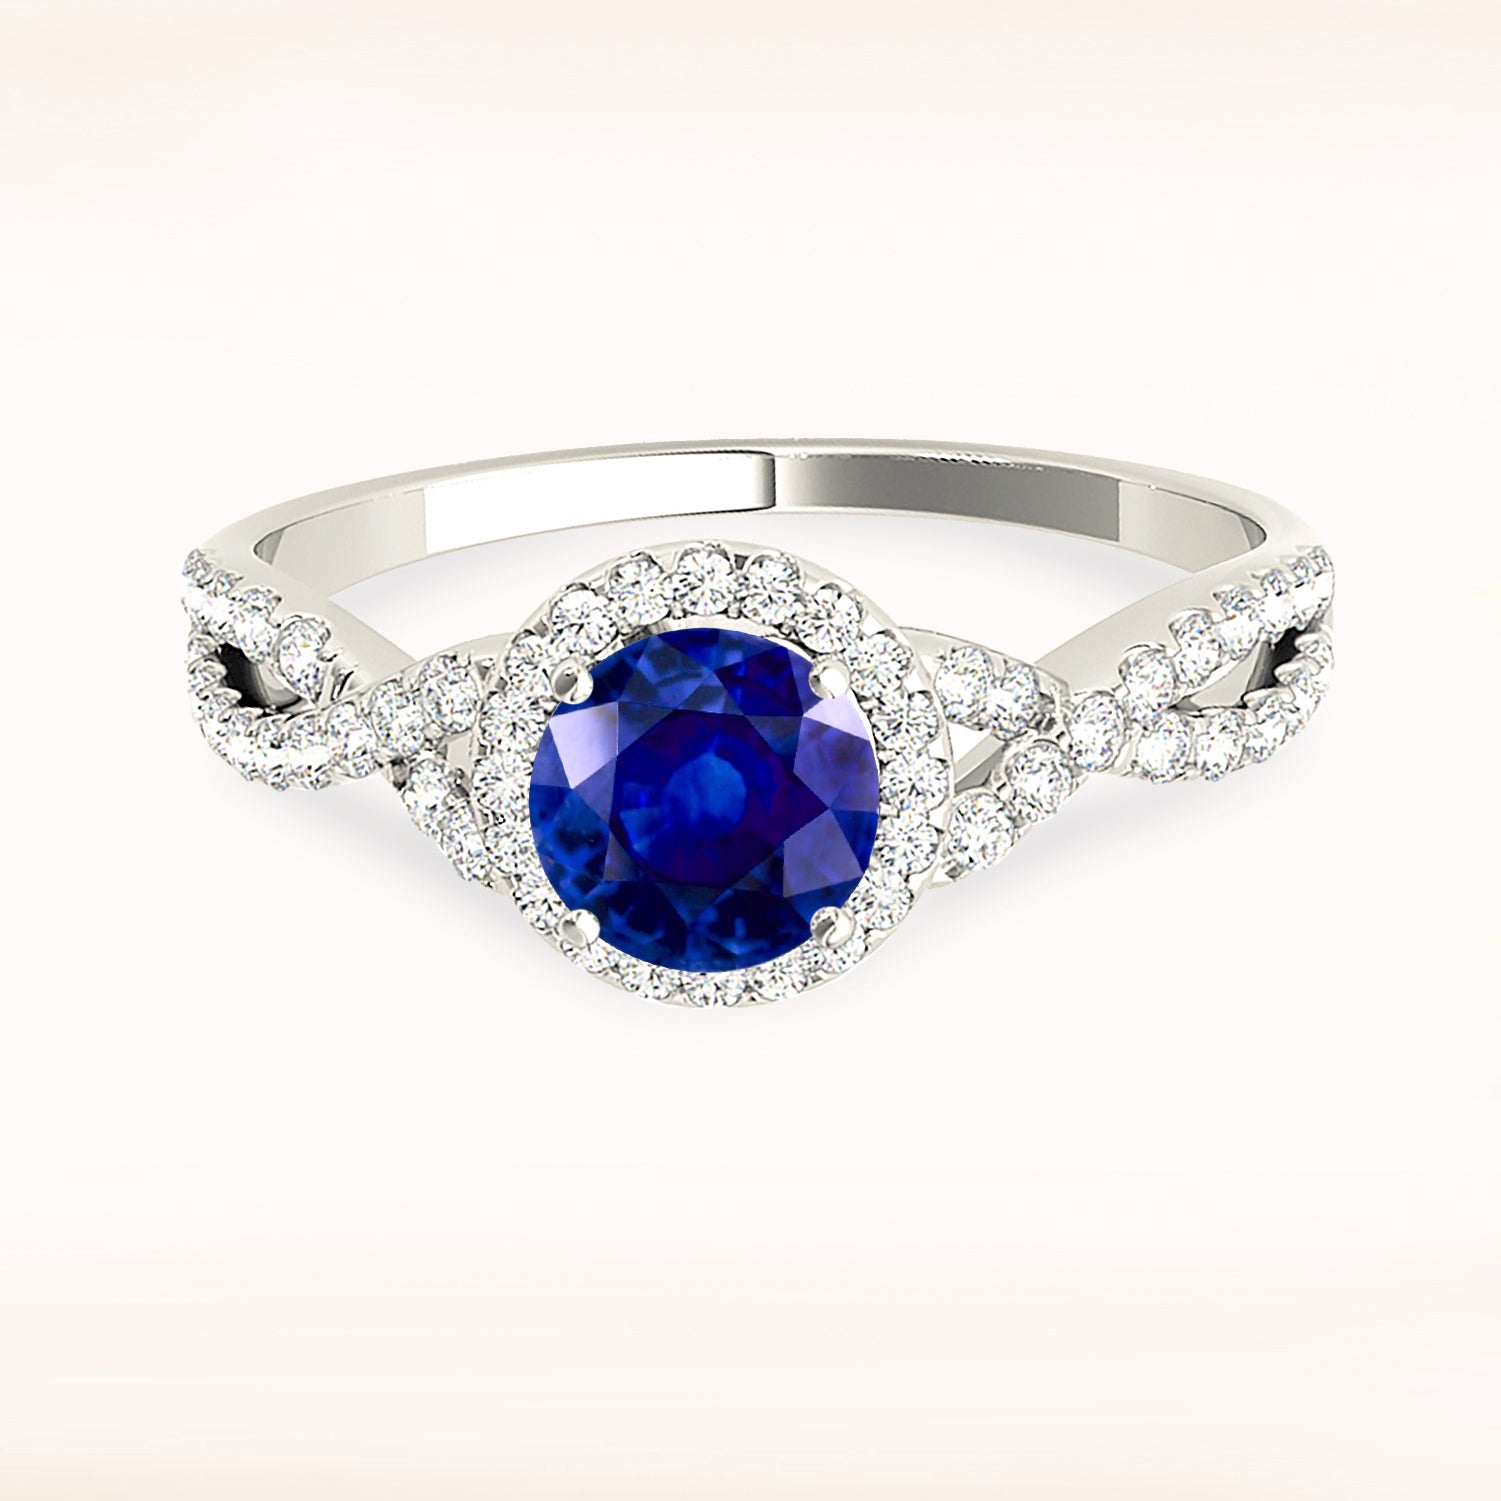 1.35 ct. Genuine Blue Sapphire Ring With 0.25 ctw. Diamond Halo, Open Braided Diamond Band | Natural Sapphire And Diamond Gemstone Ring-in 14K/18K White, Yellow, Rose Gold and Platinum - Christmas Jewelry Gift -VIRABYANI